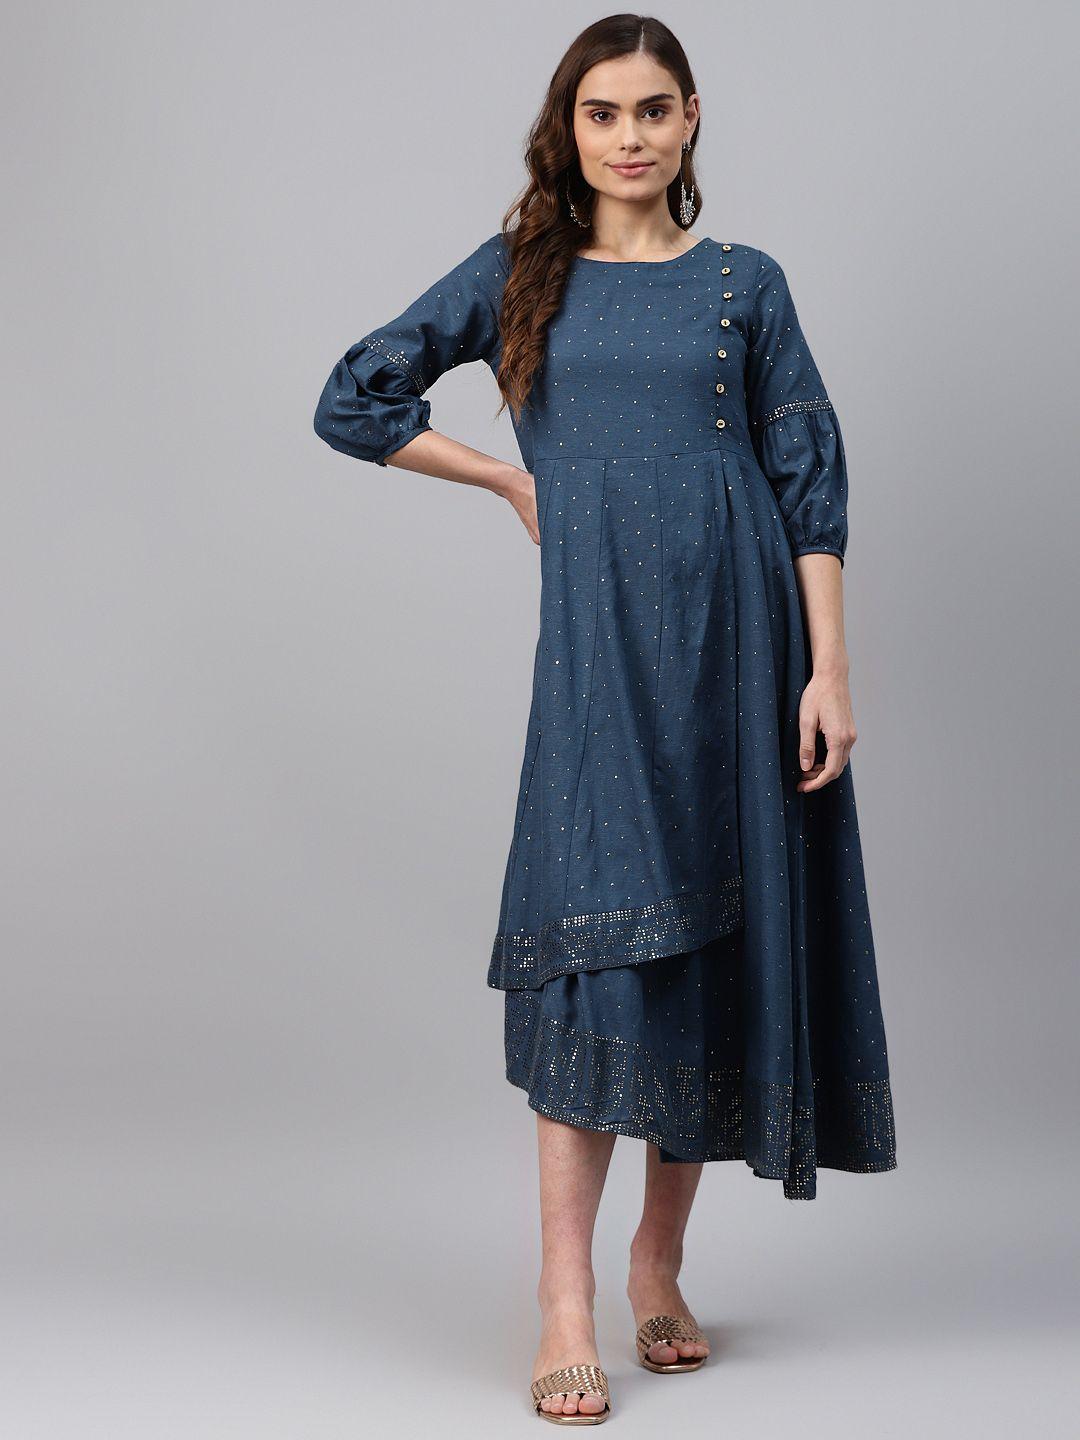 rangriti-navy-blue-polka-dot-print-bishop-sleeves-midi-dress